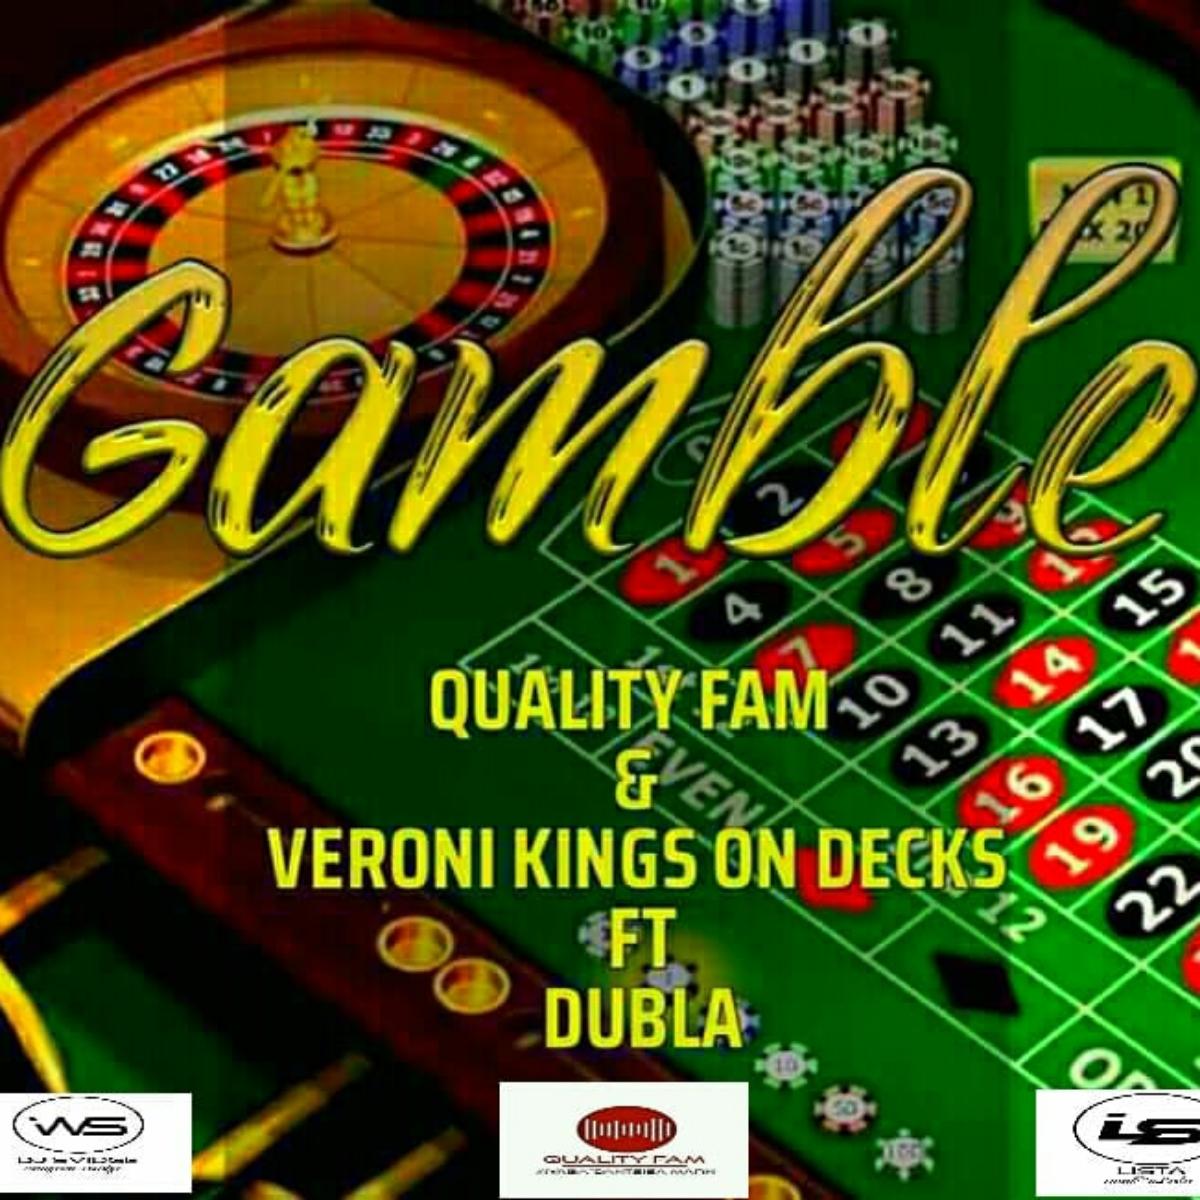 Quality Fam & Veroni Kings On Decks - Gamble (Ft. Dj Dubla)